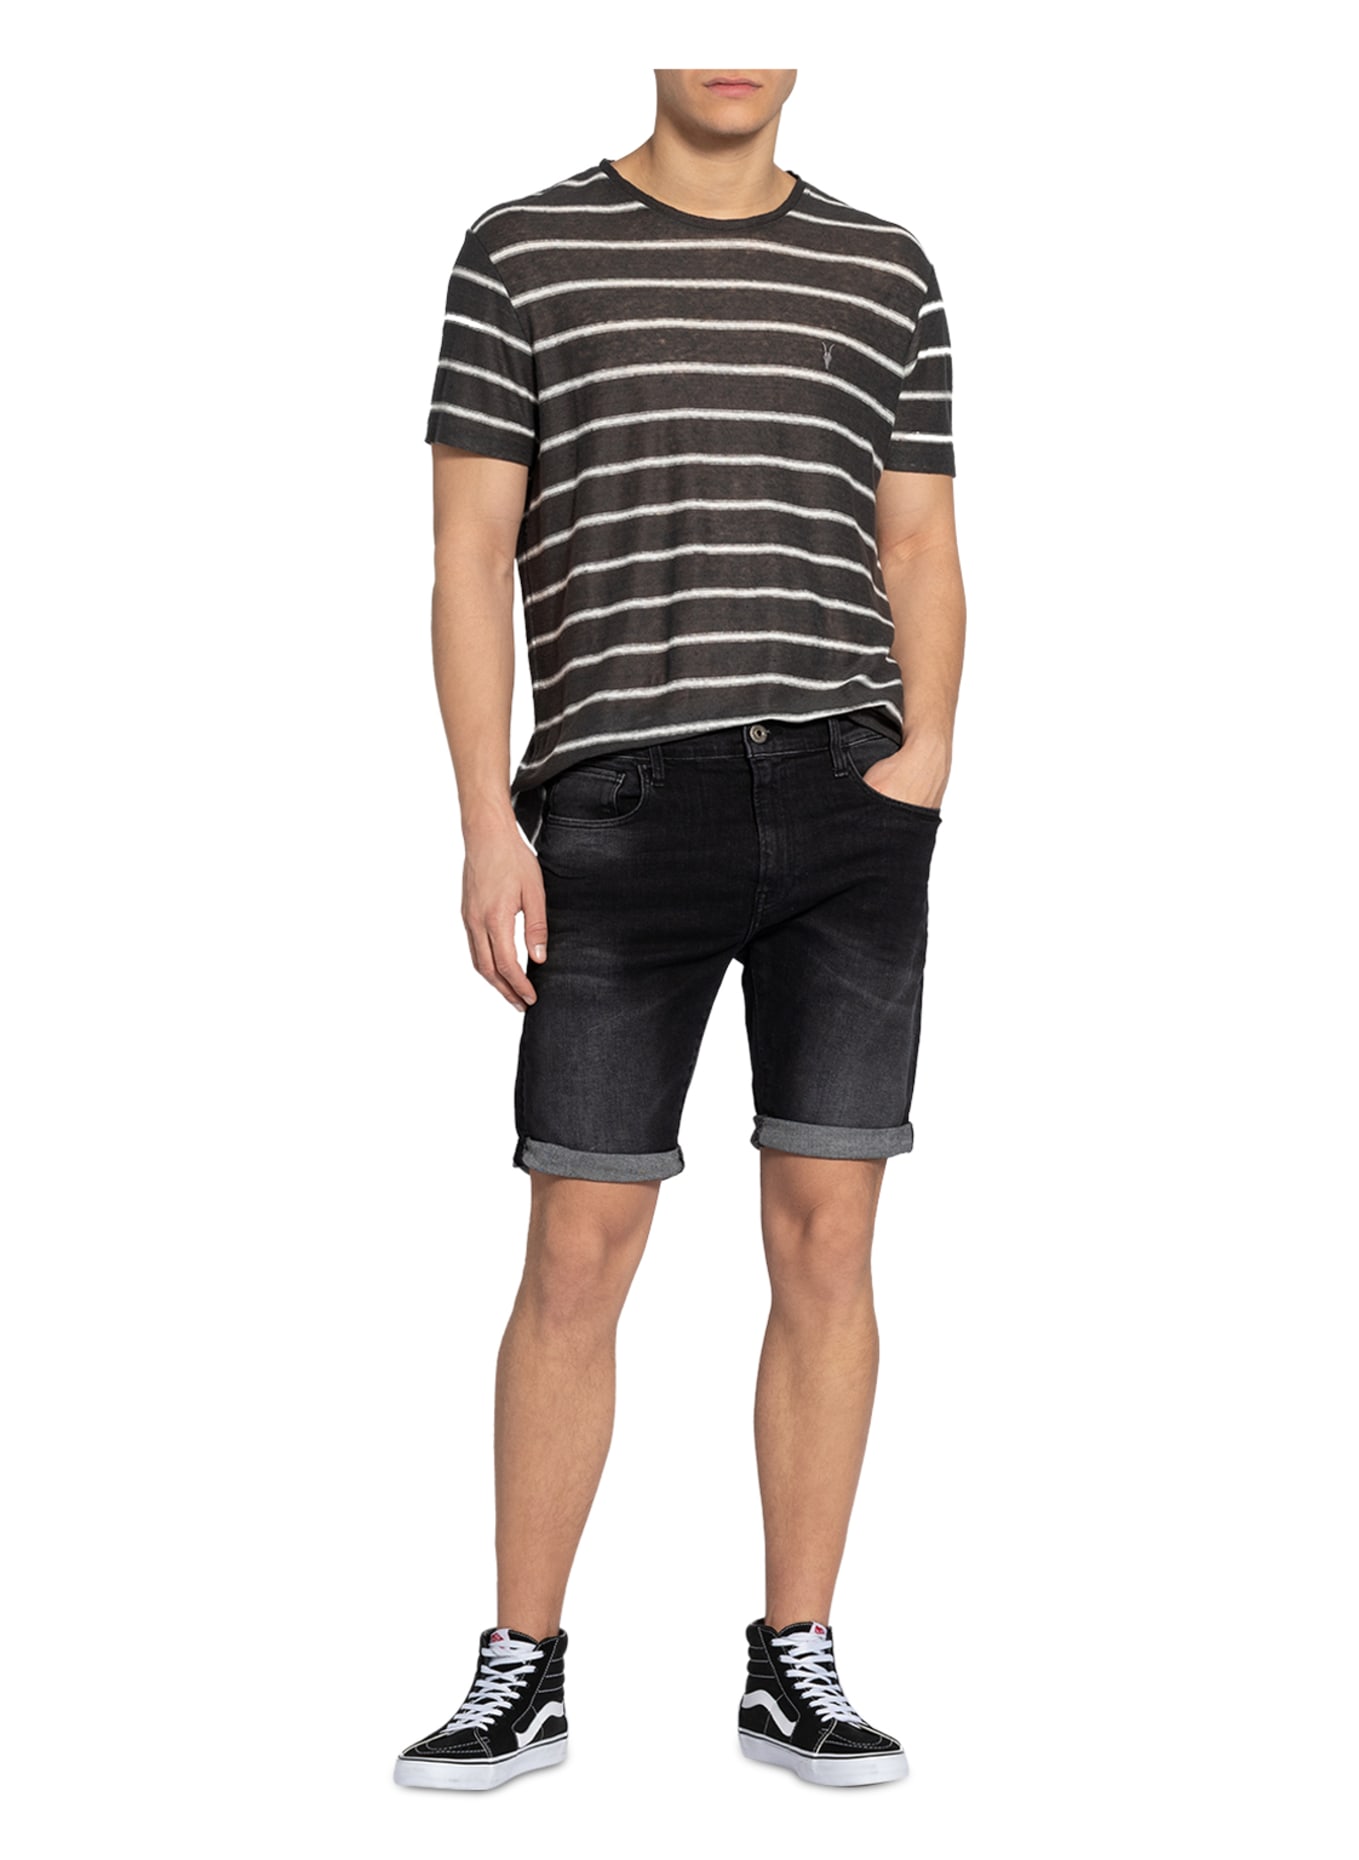 G-Star RAW Denim shorts 3301 slim fit, Color: 9887 Medium Aged Grey (Image 2)